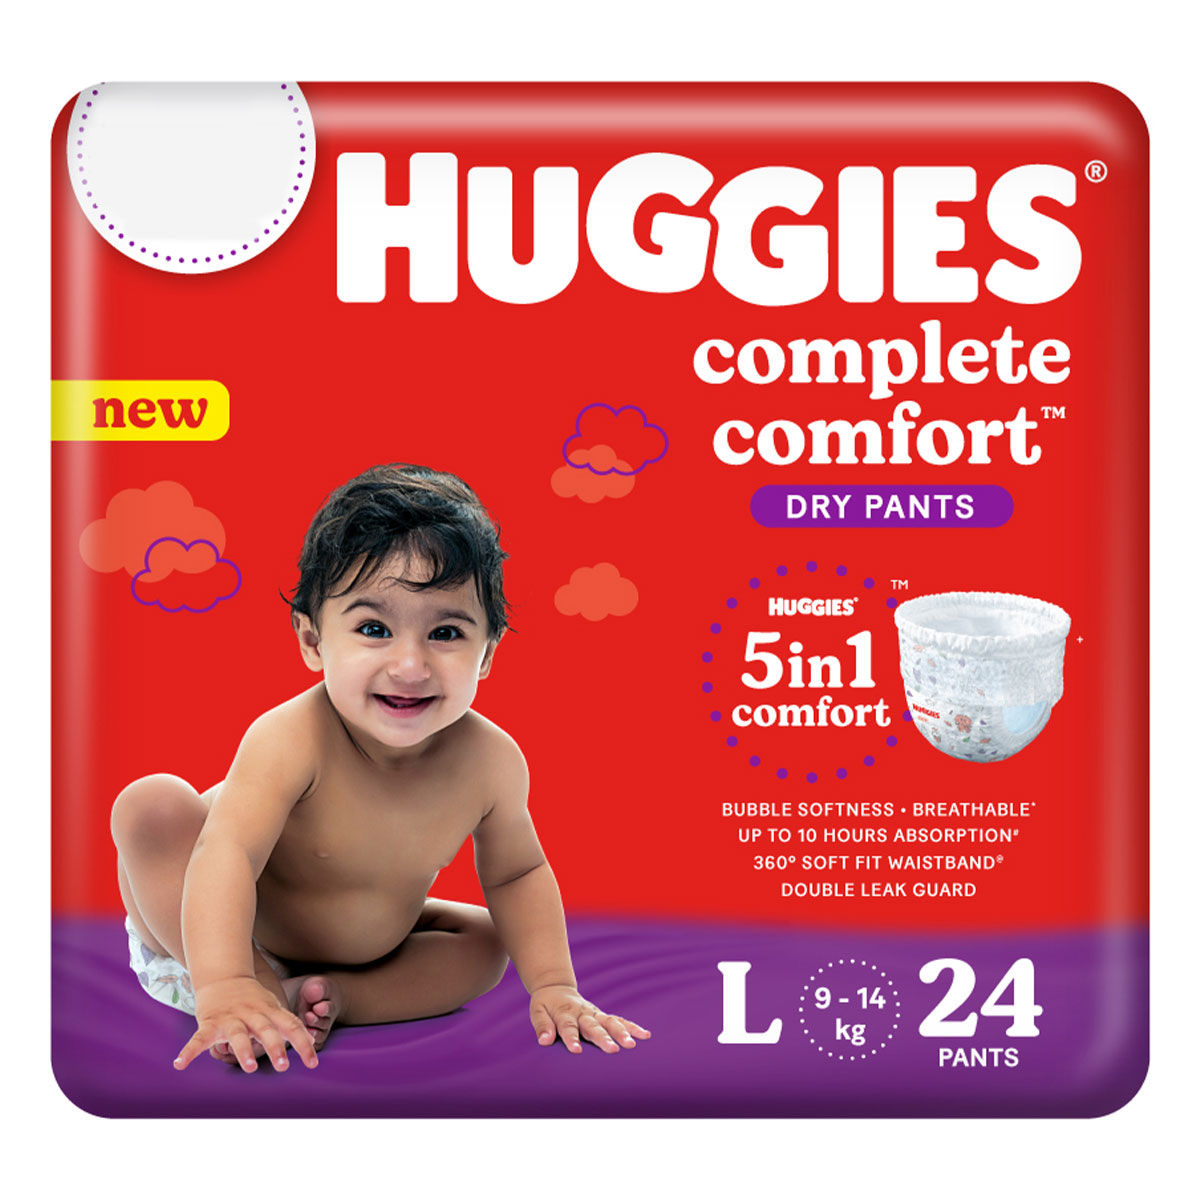 Huggies Complete Comfort Wonder Pants Medium 712kg Size Count 100 Baby  Diaper Pants Combo Pack of 2 50 count Per Pack 100 count with 5 in 1  Comfort  Amazonin